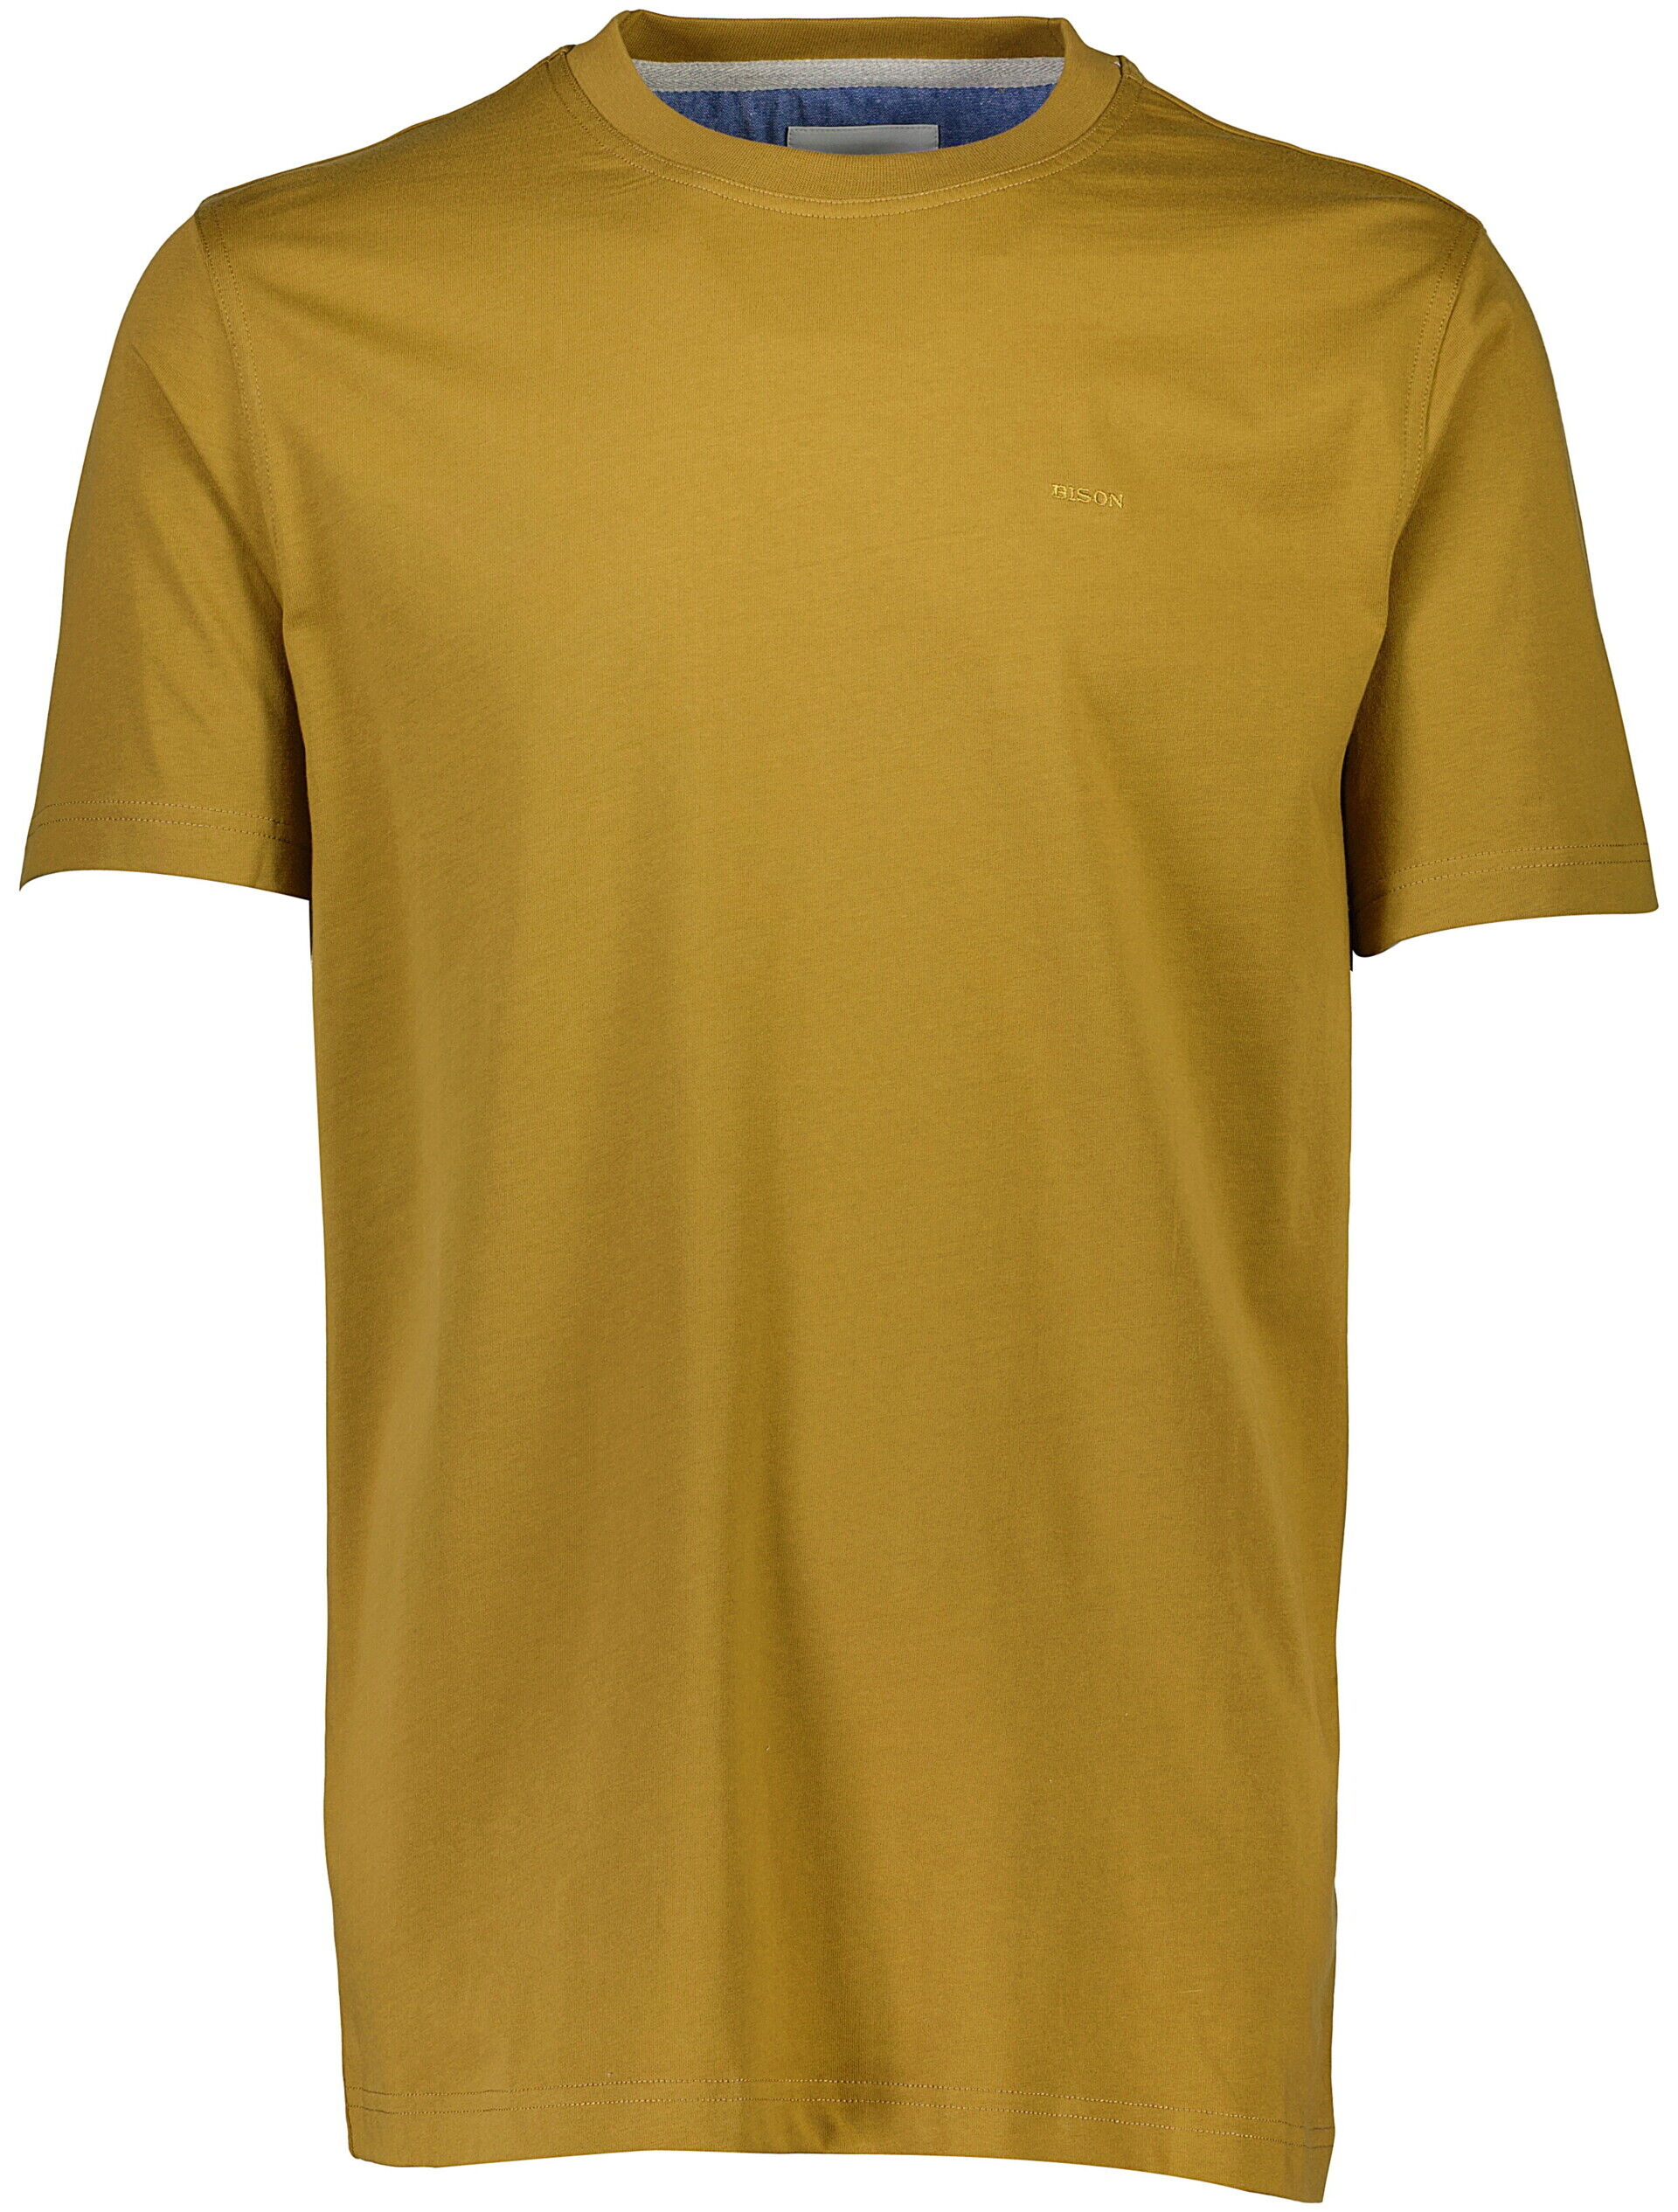 Bison  T-shirt Gul 80-40000BIG